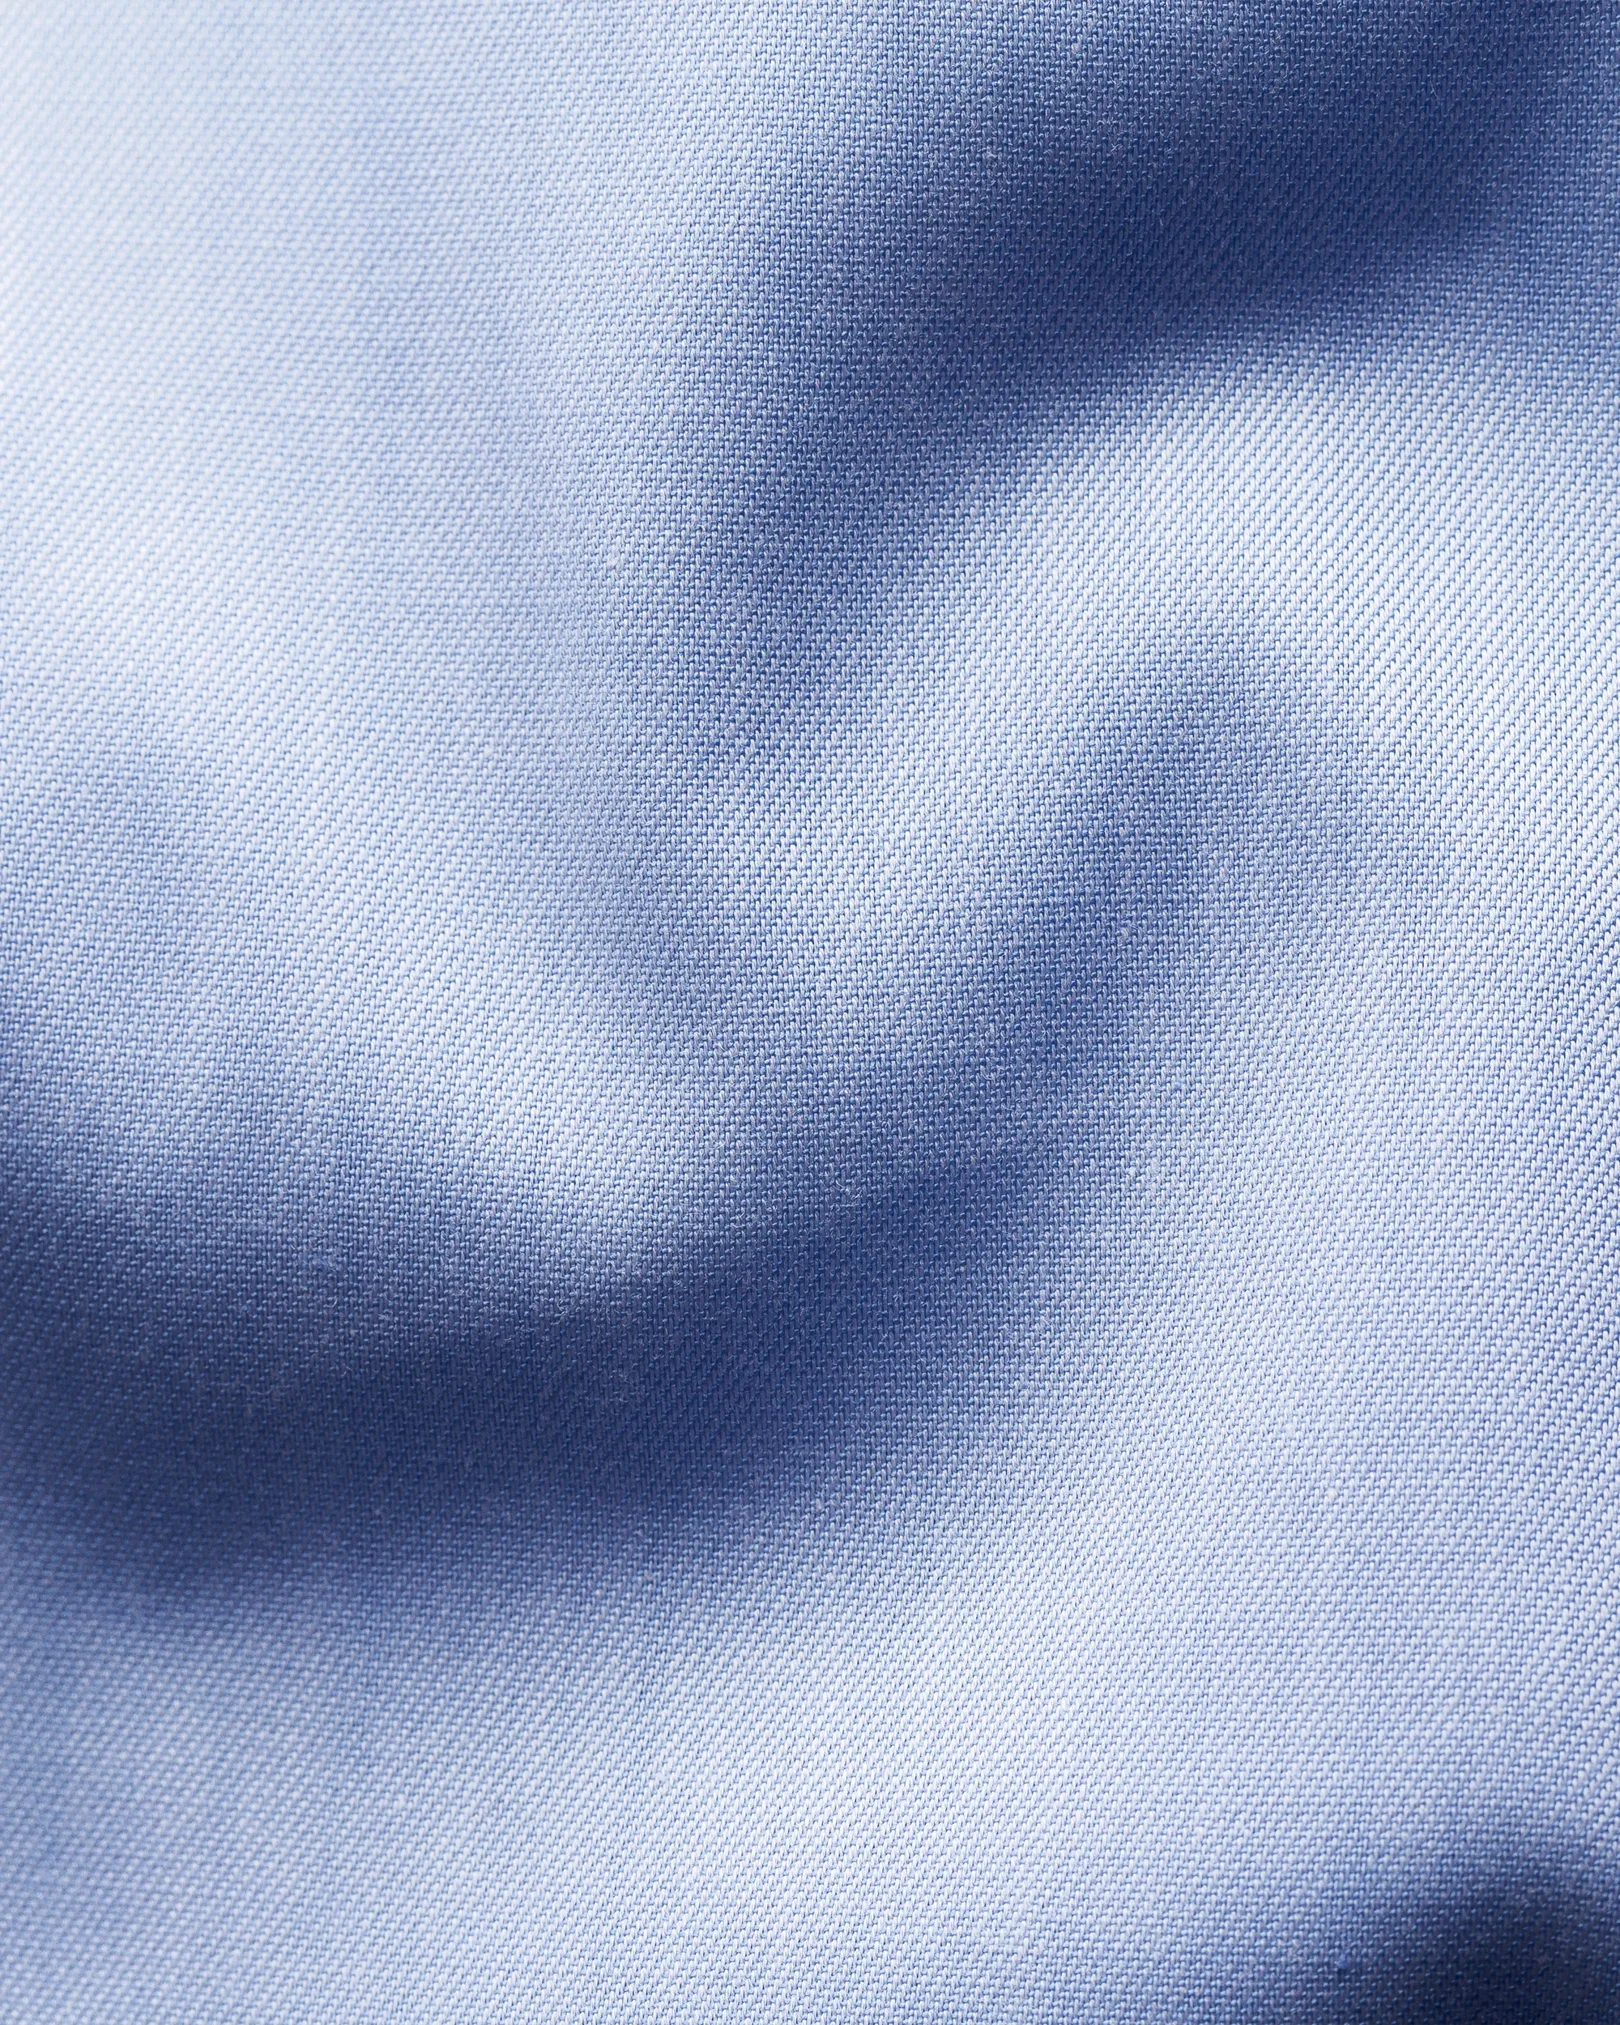 Eton - light blue twill shirt blue floral details